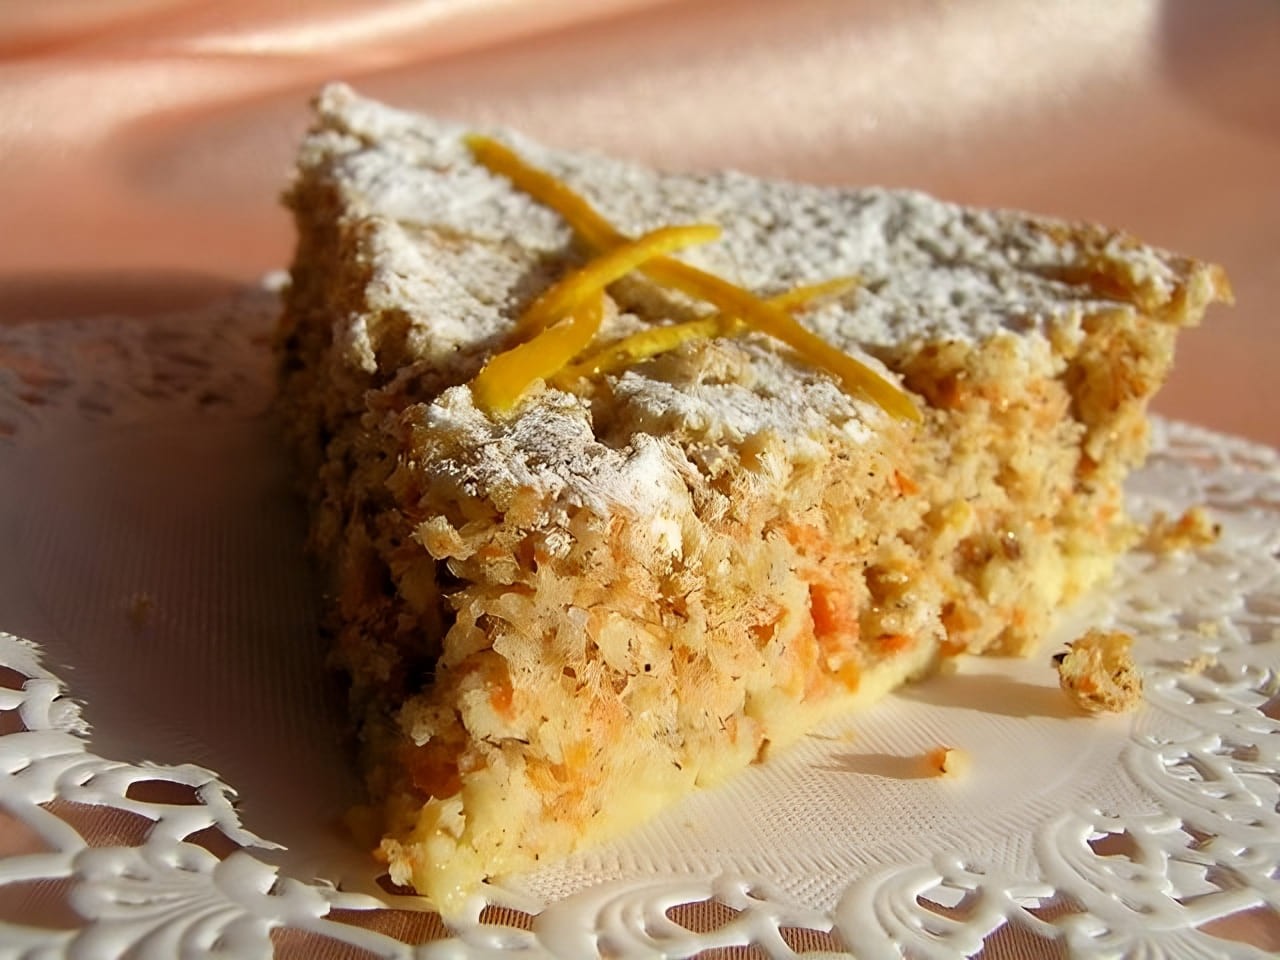 Italian carrot cake